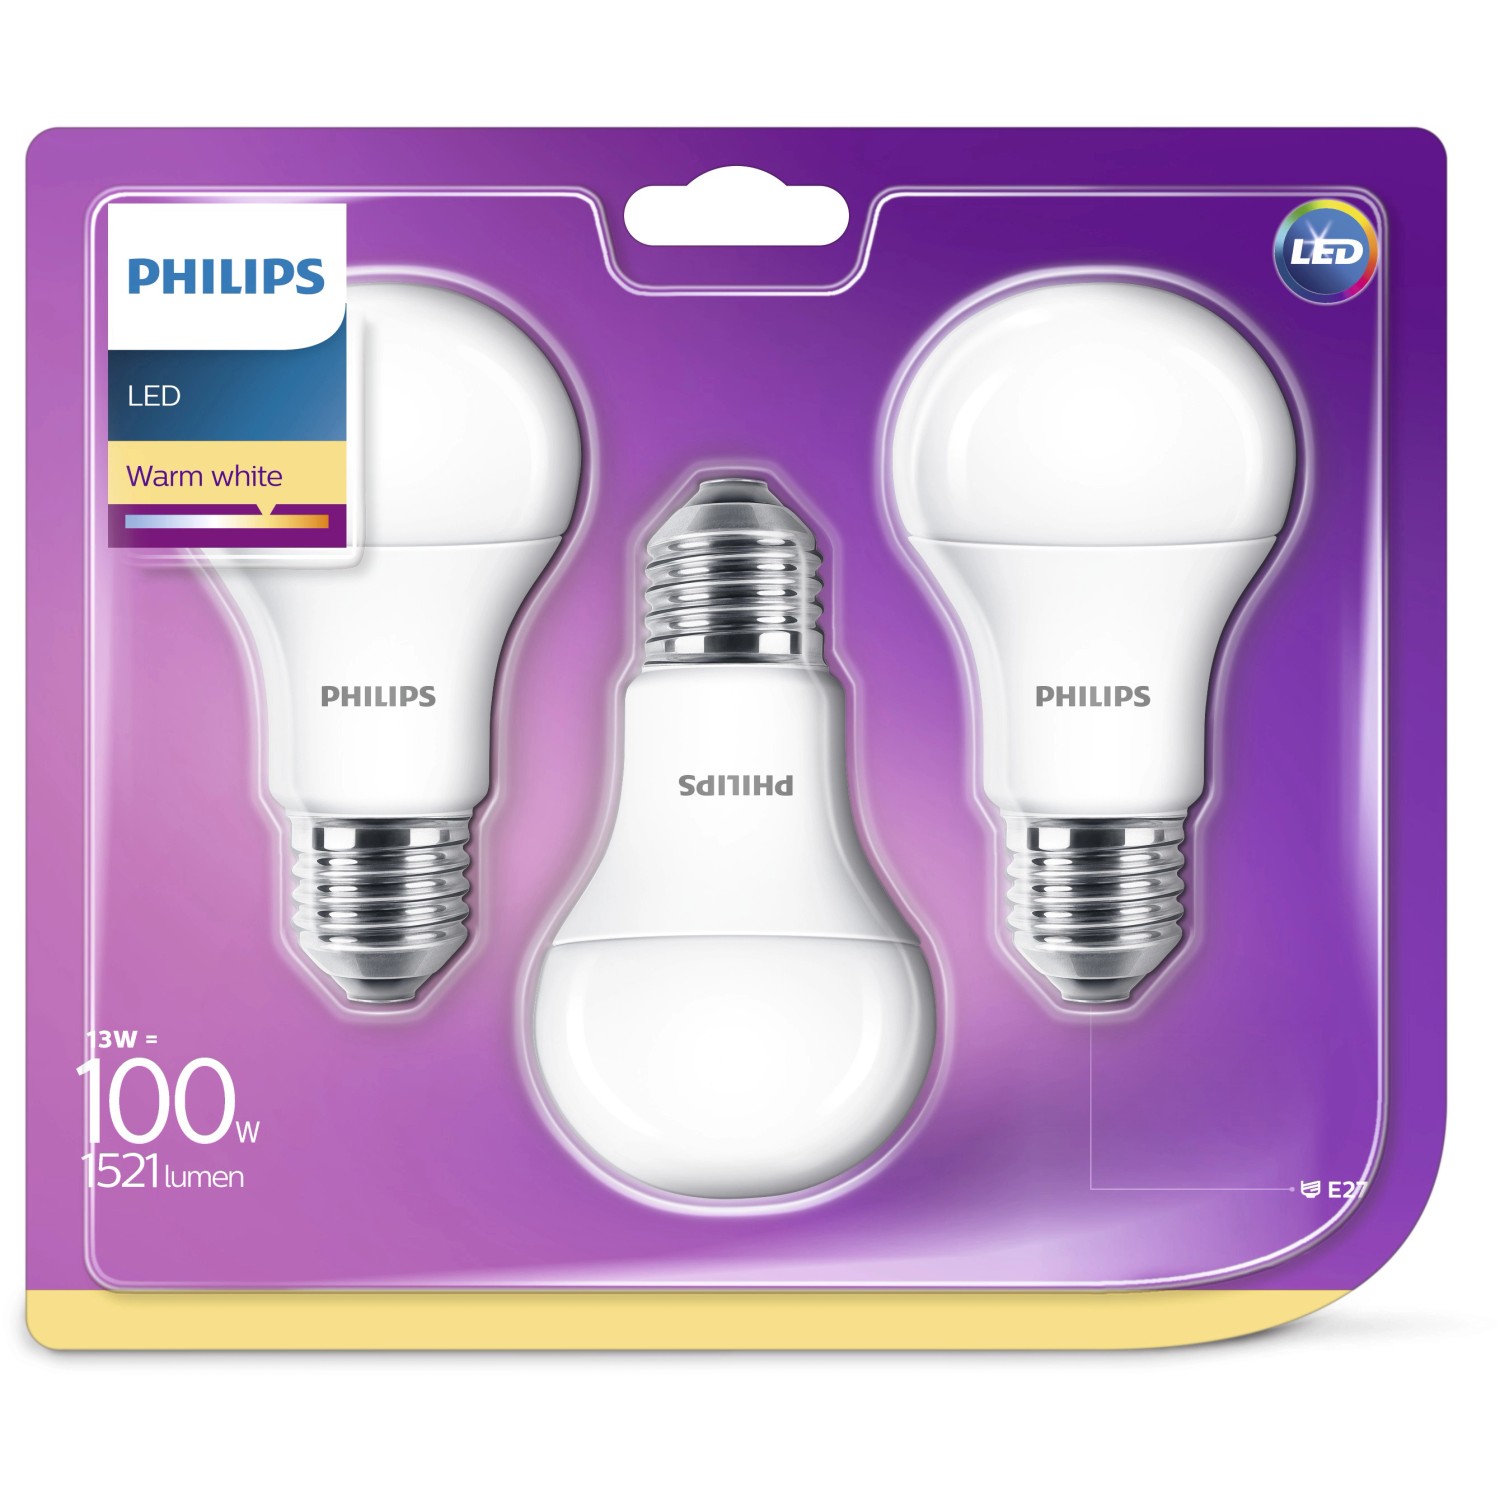 Светодиодные филипс купить. Lampa led 6w e27 220-240v 806 Lumen warm White, Philips. Philips e27. Лампа светодиодная 3w 806 лм e27. Лампа светодиодная Philips led 6500k, e27, a60, 8вт.